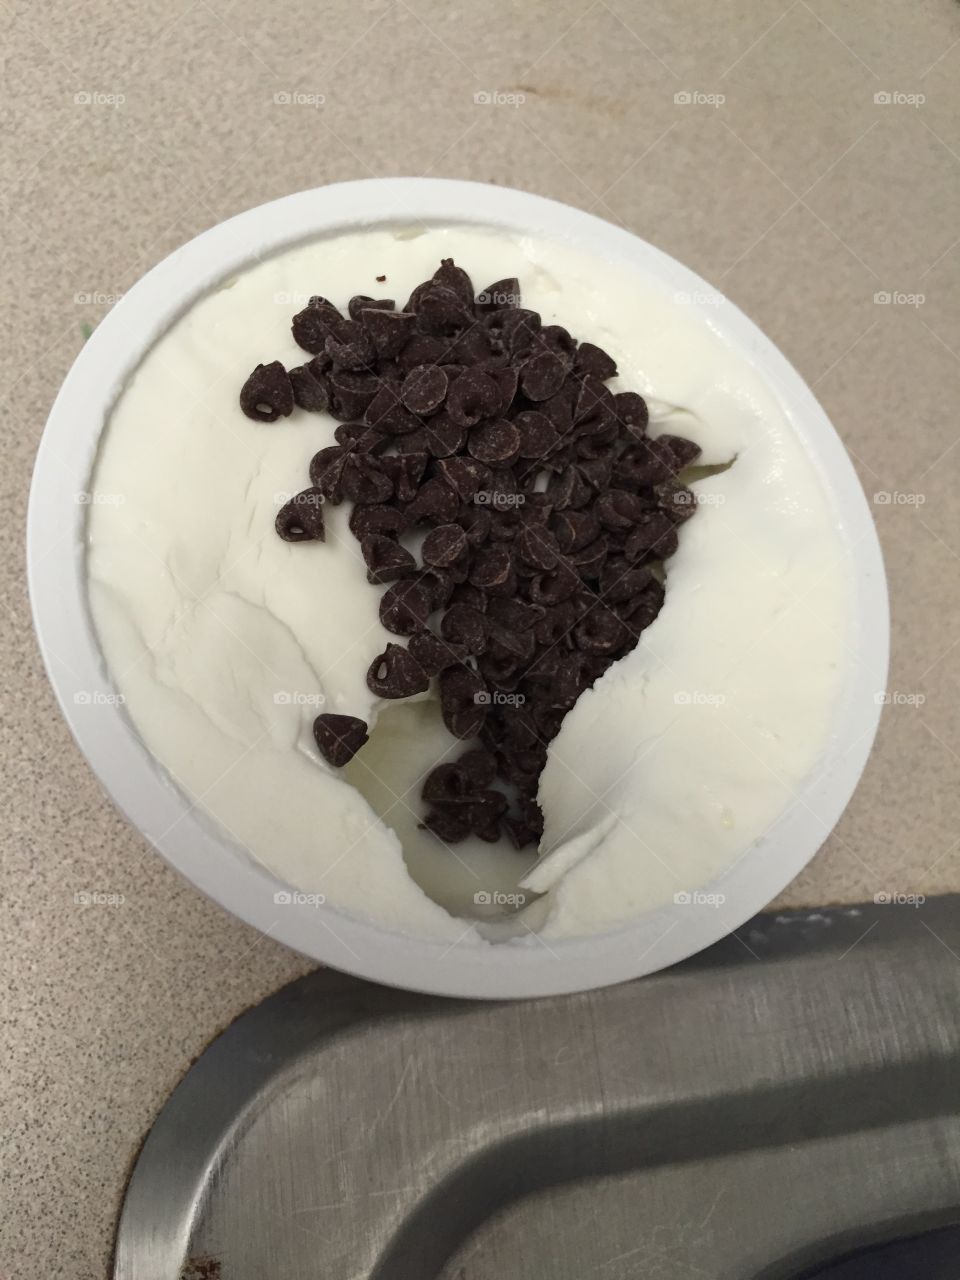 Cascade of chocolate in my yogurt